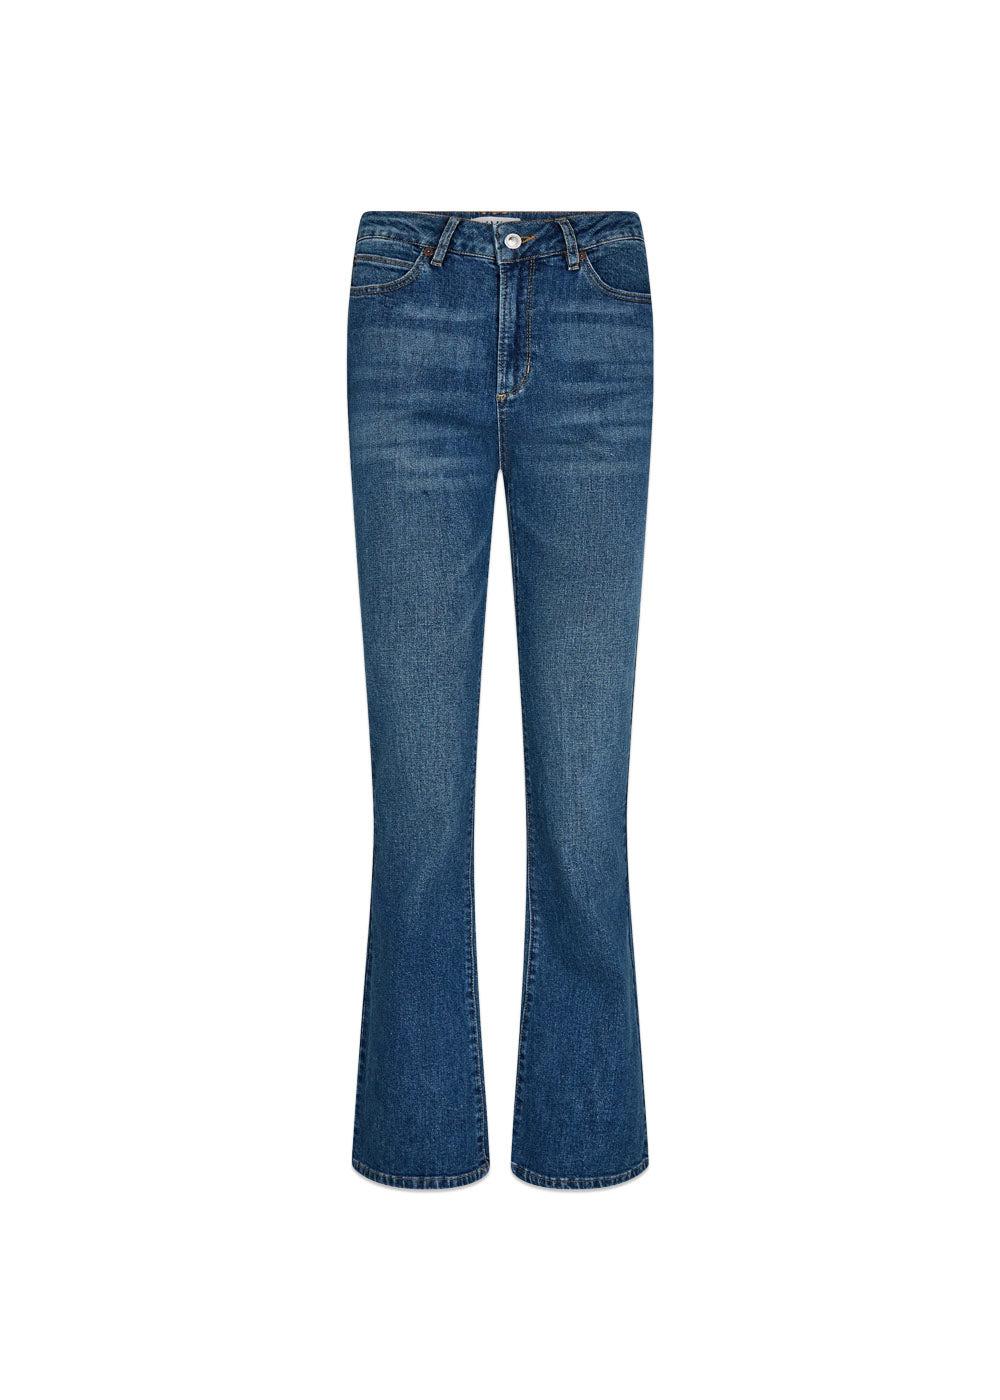 Ivy Copenhagens IVY-Tara Jeans Wash Liverpool Street - Denim Blue. Køb jeans her.